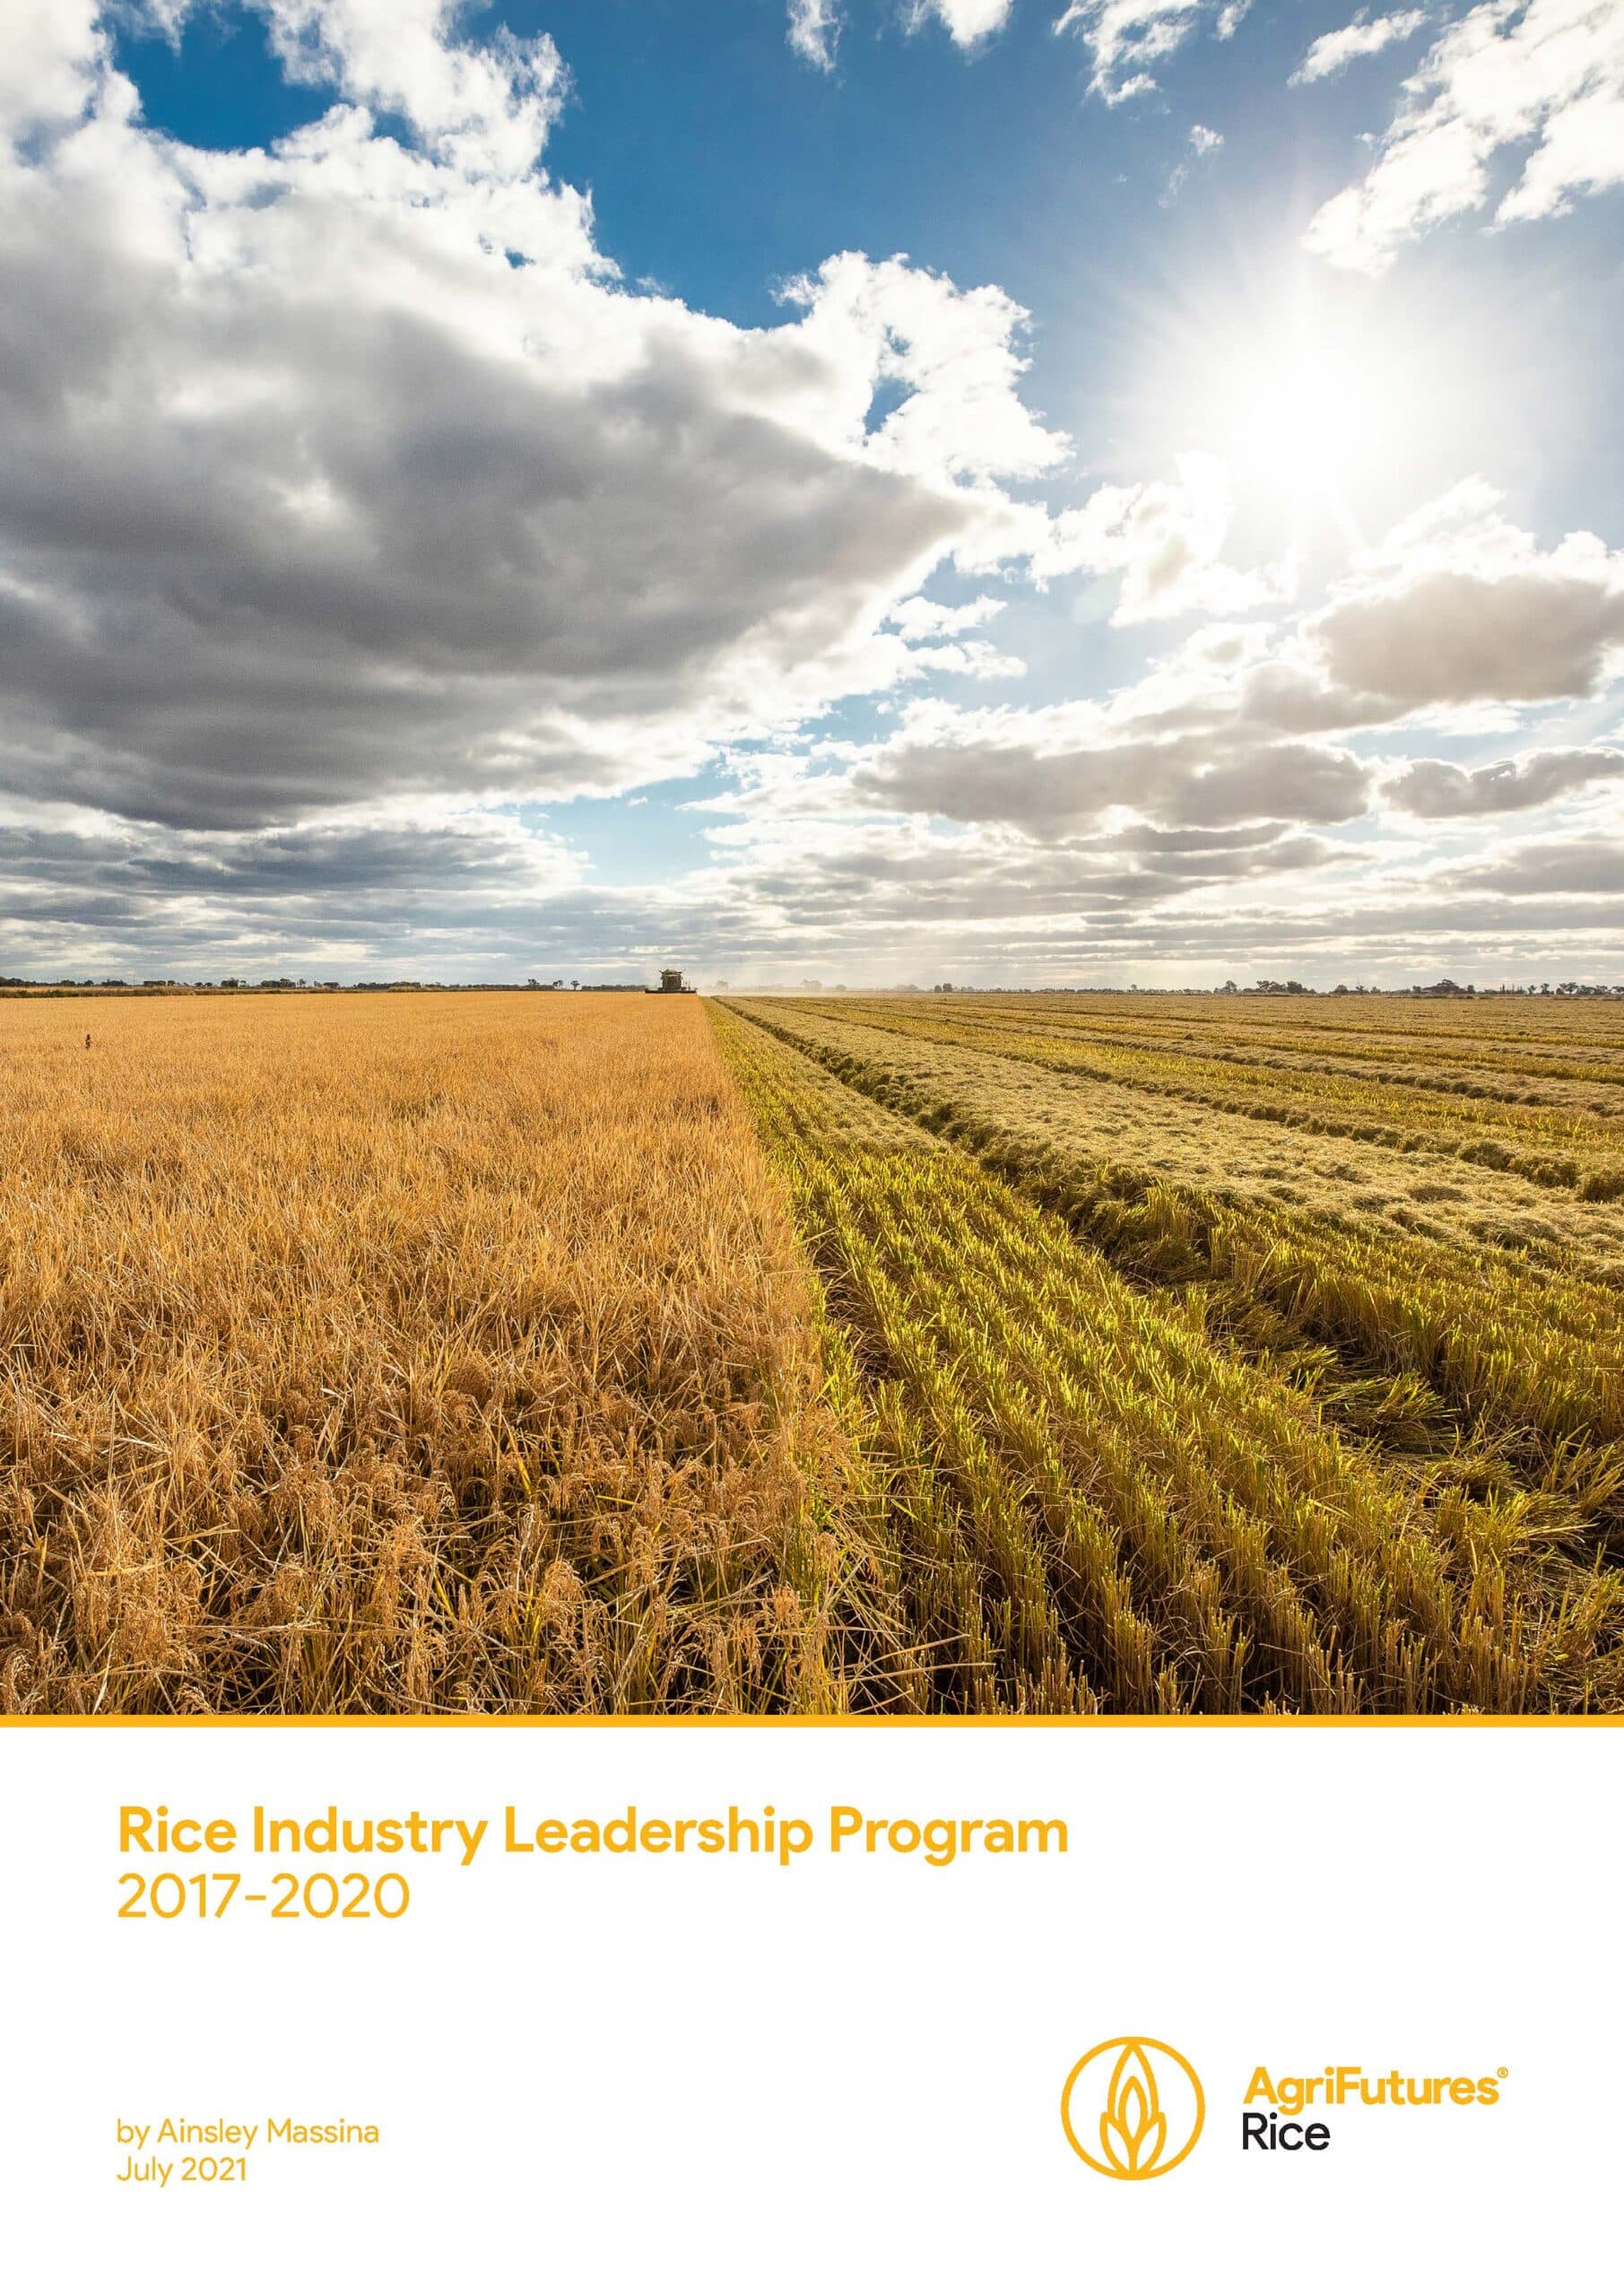 Rice Industry Leadership Program 2017-2020 - image